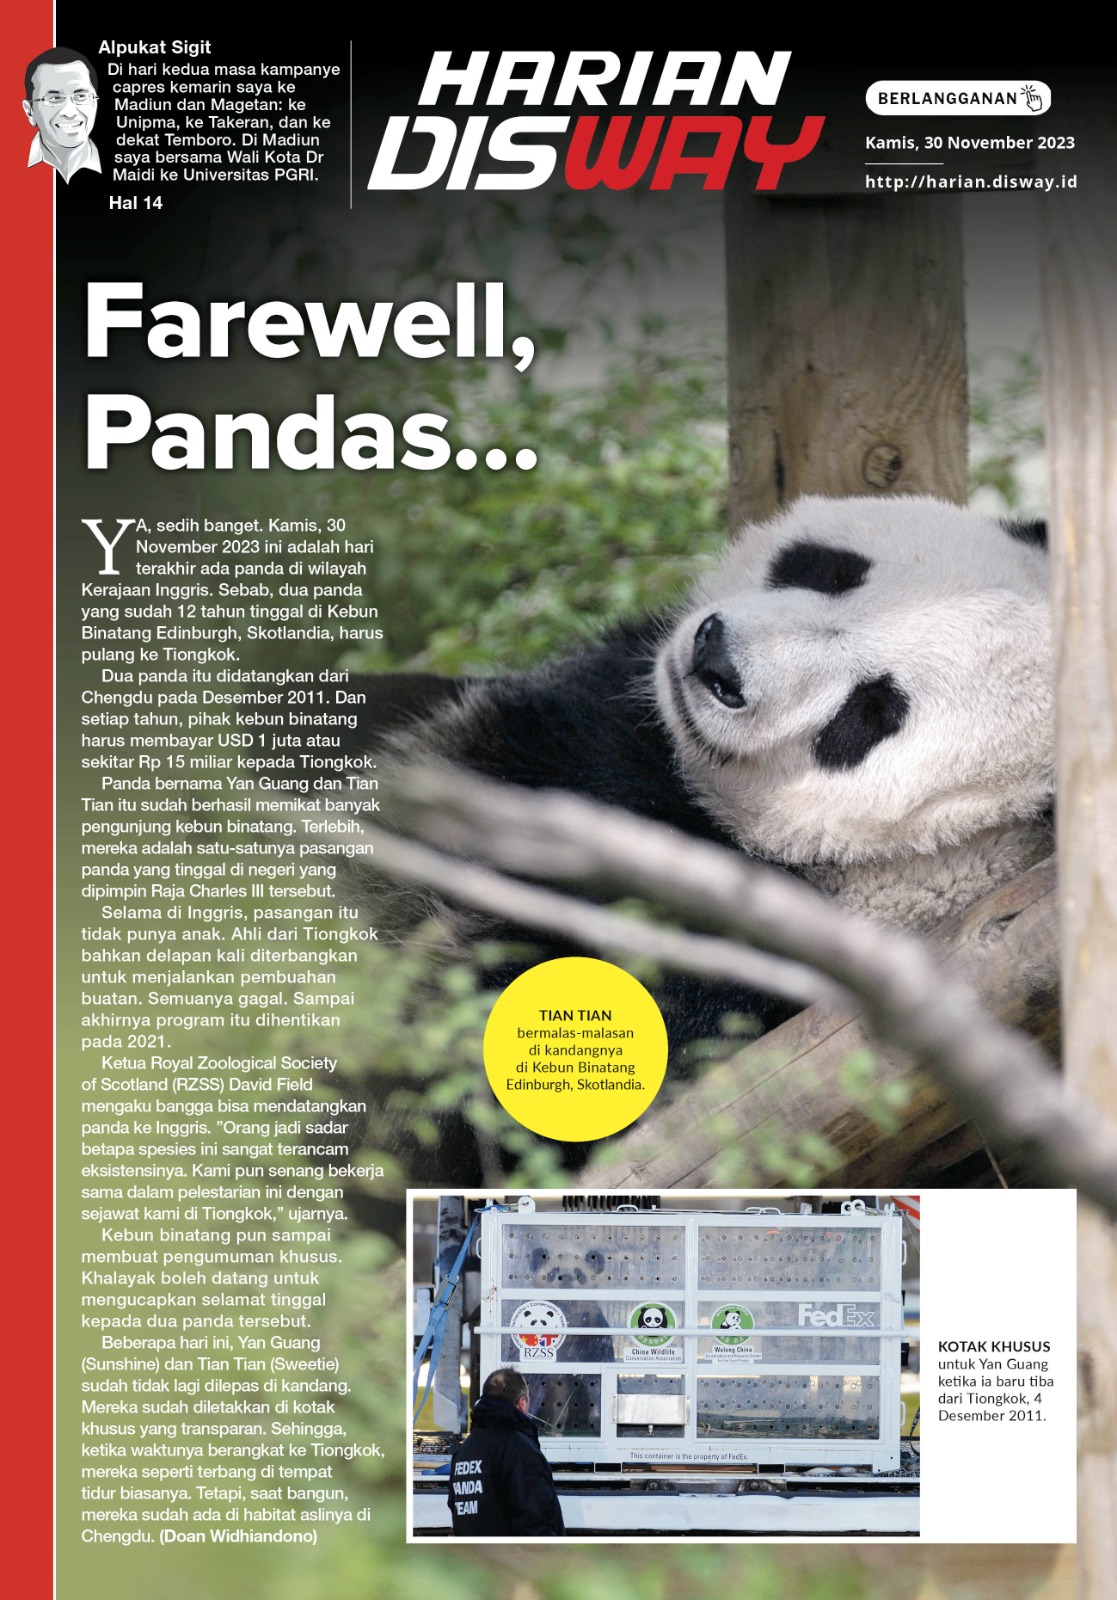 Farewell, Pandas…